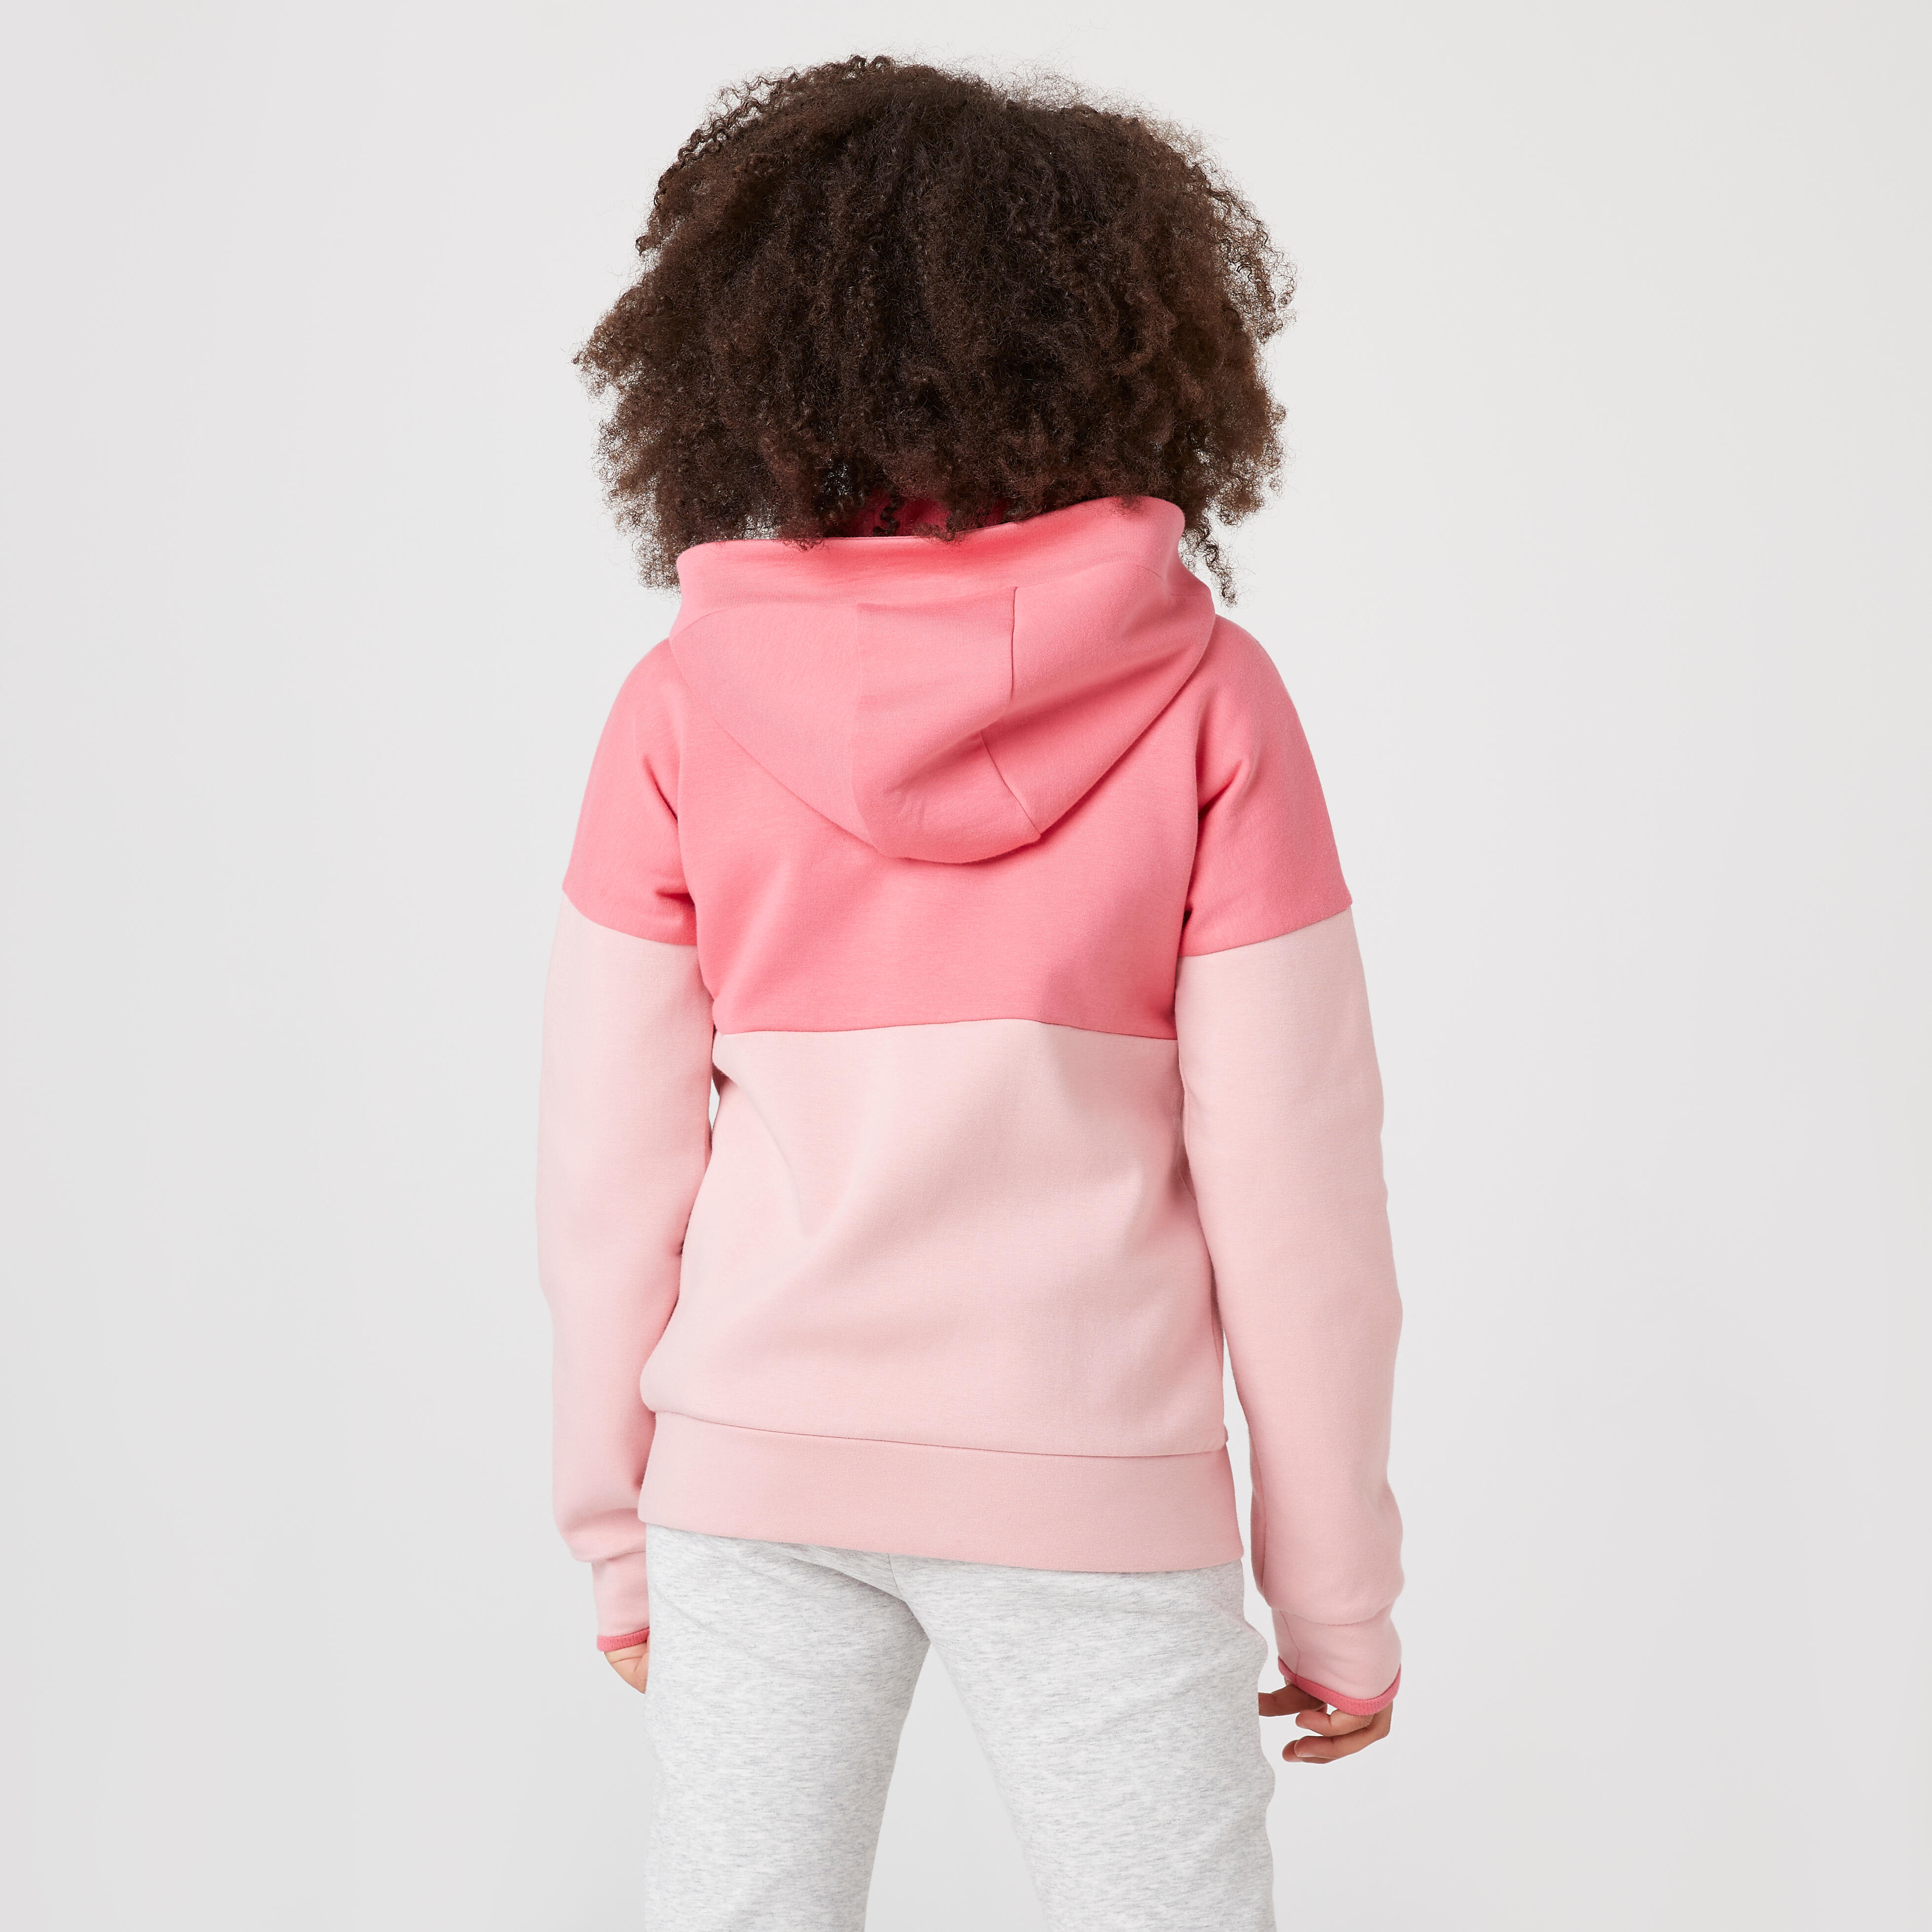 Girls Hoodie Kids Jacket Zip Up Sweatshirt Rainbow Unicorn Clothes with  Pocket : Amazon.in: Fashion